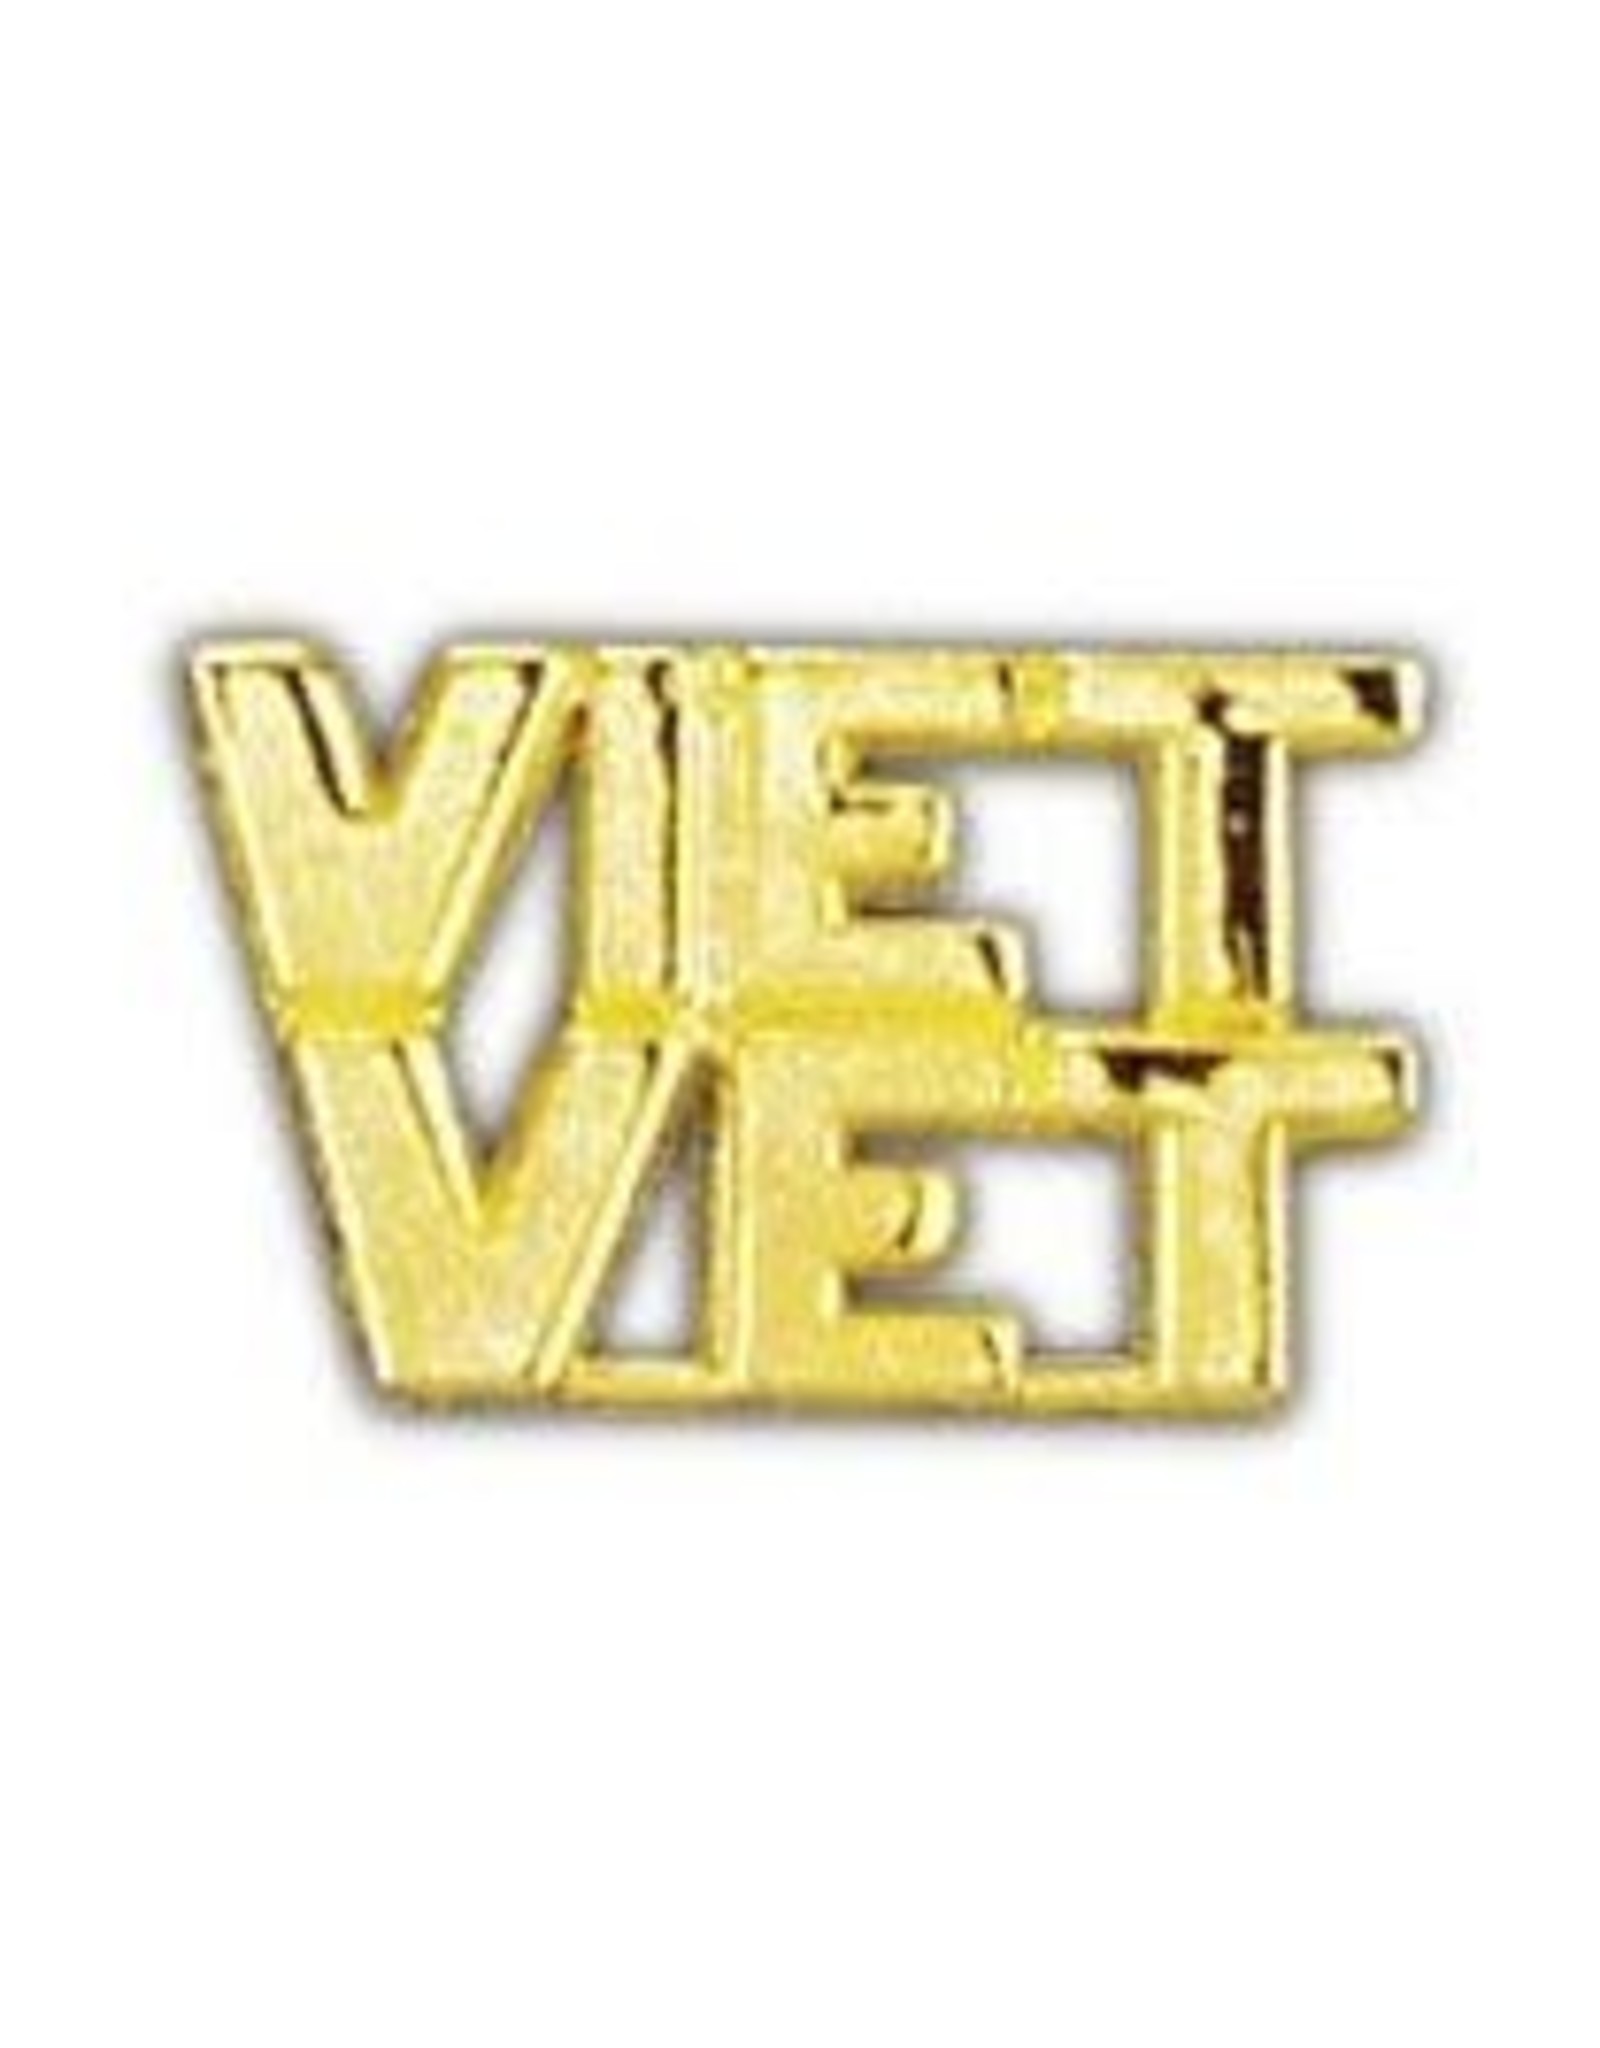 Pin - Vietnam Scroll Viet Vet